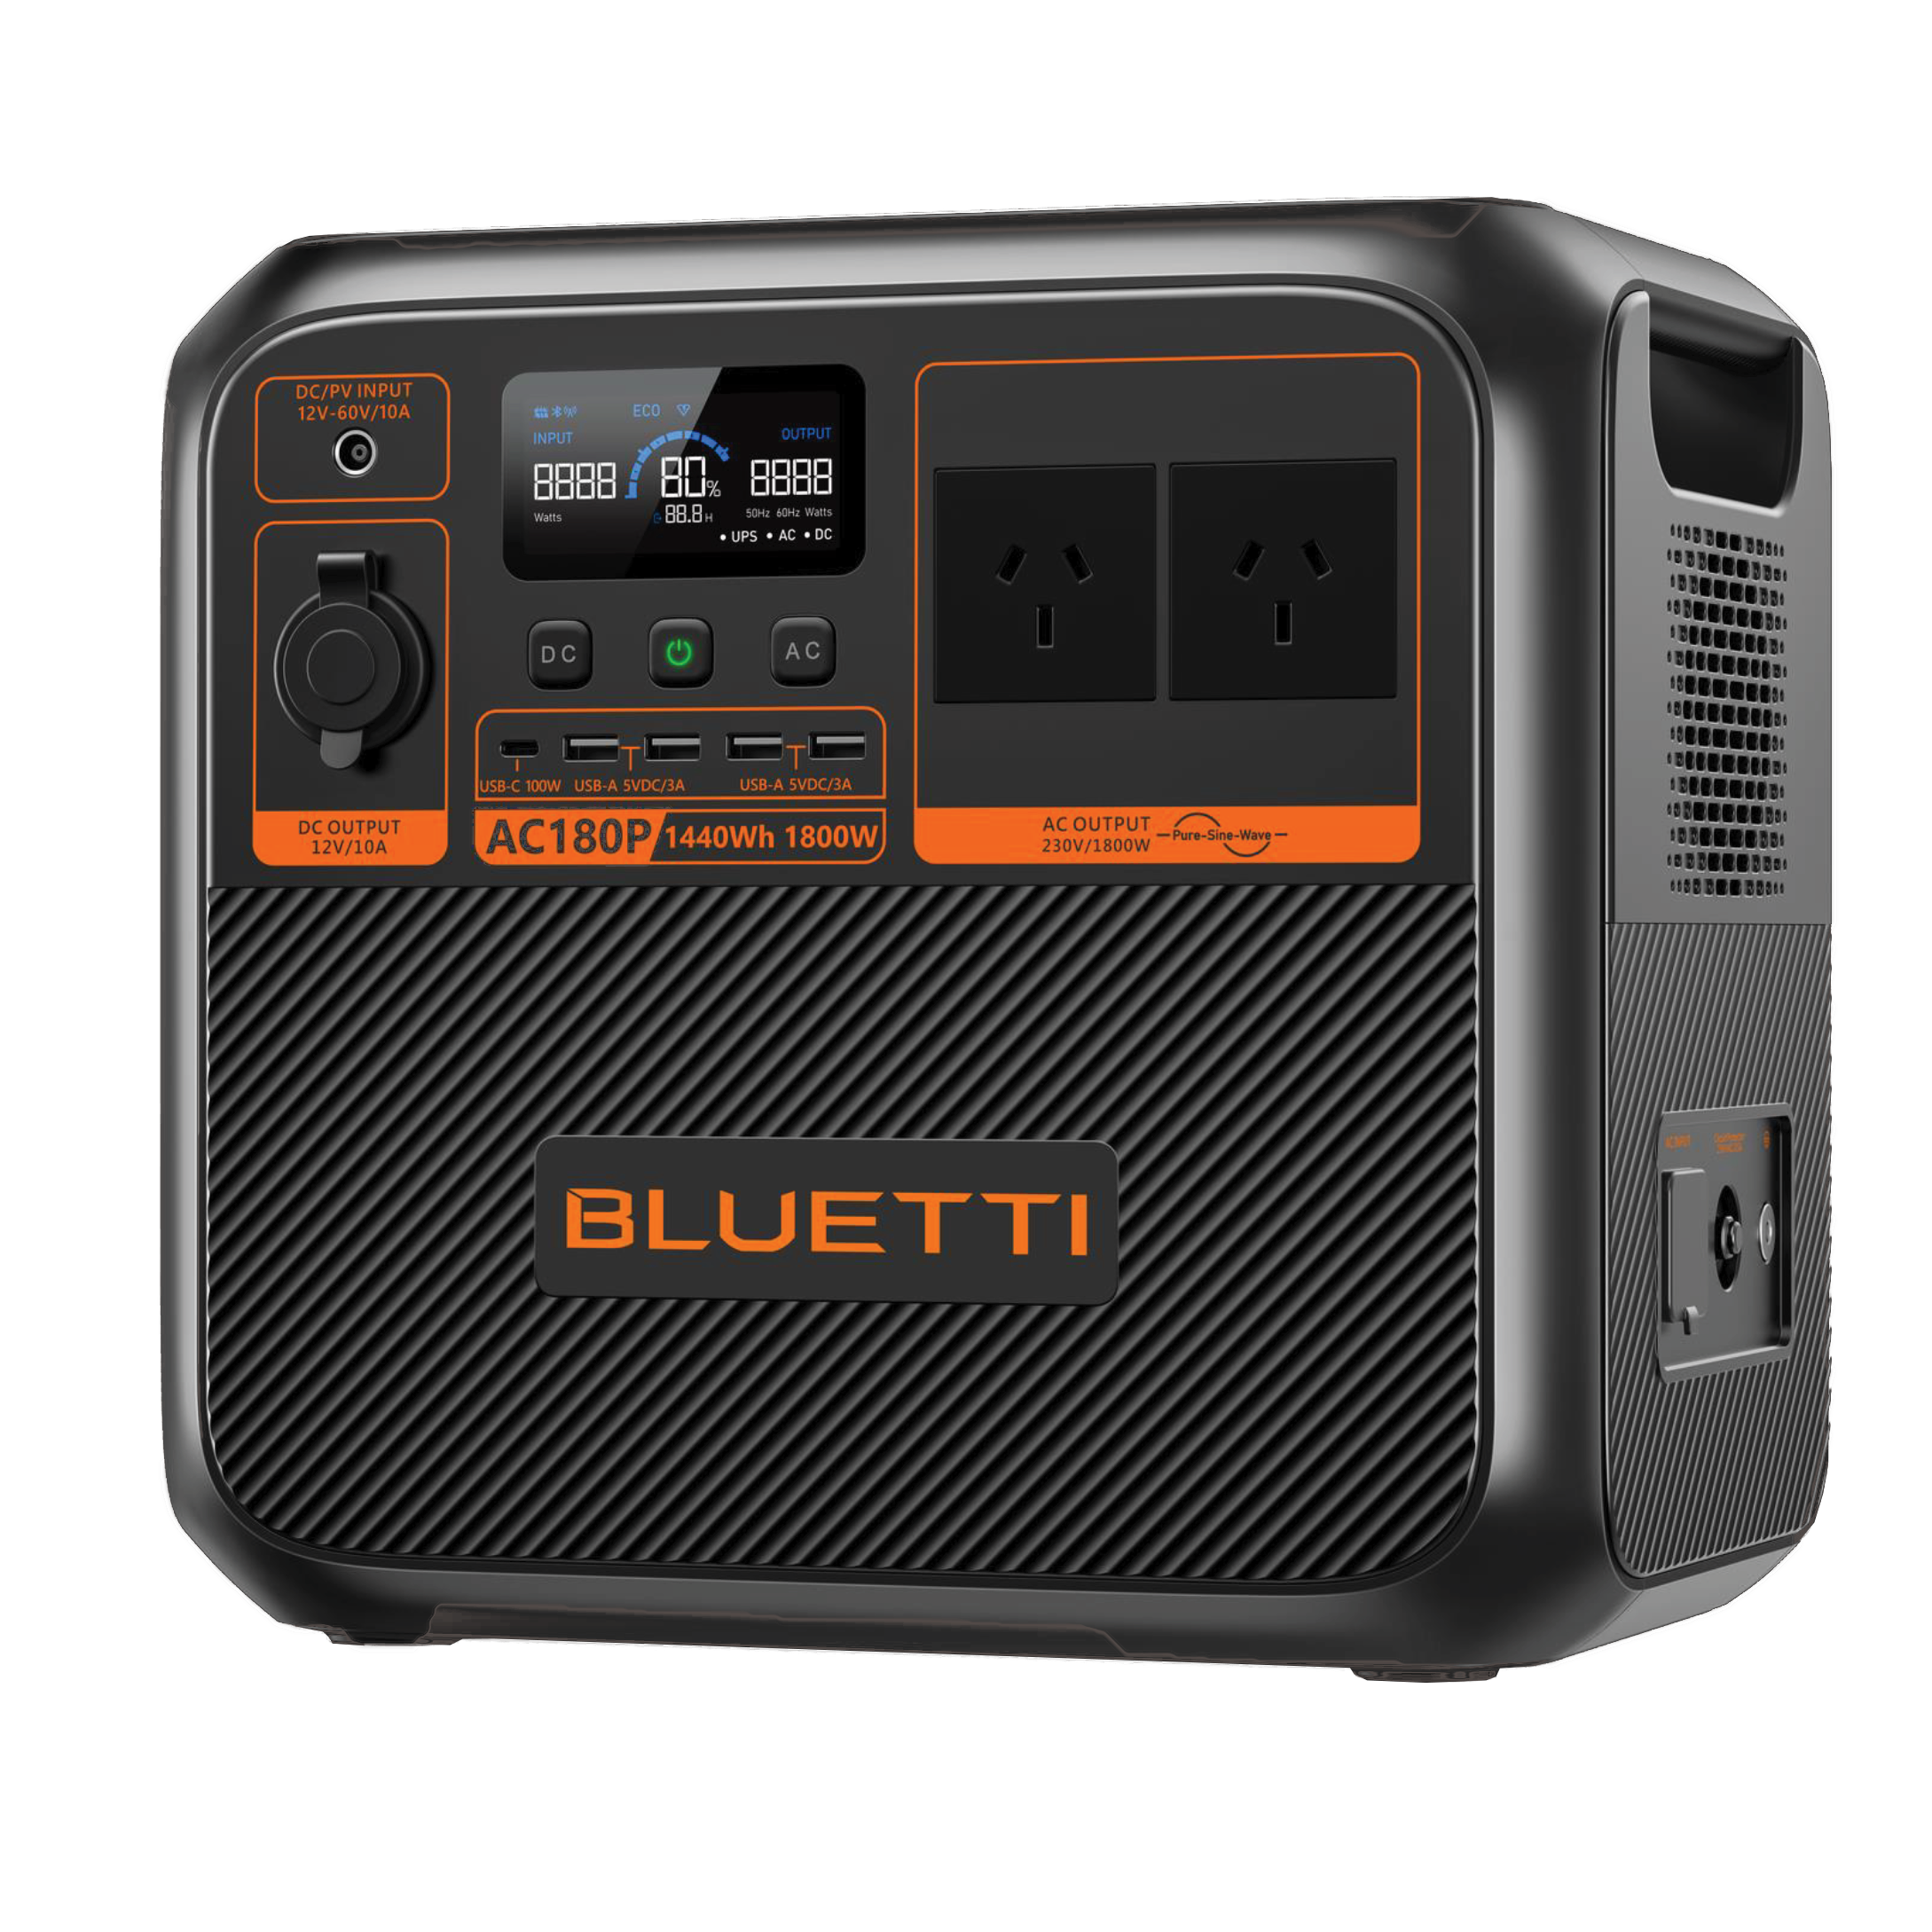 Bluetti AC180P 1800w 1440Wh Power Station [DG]